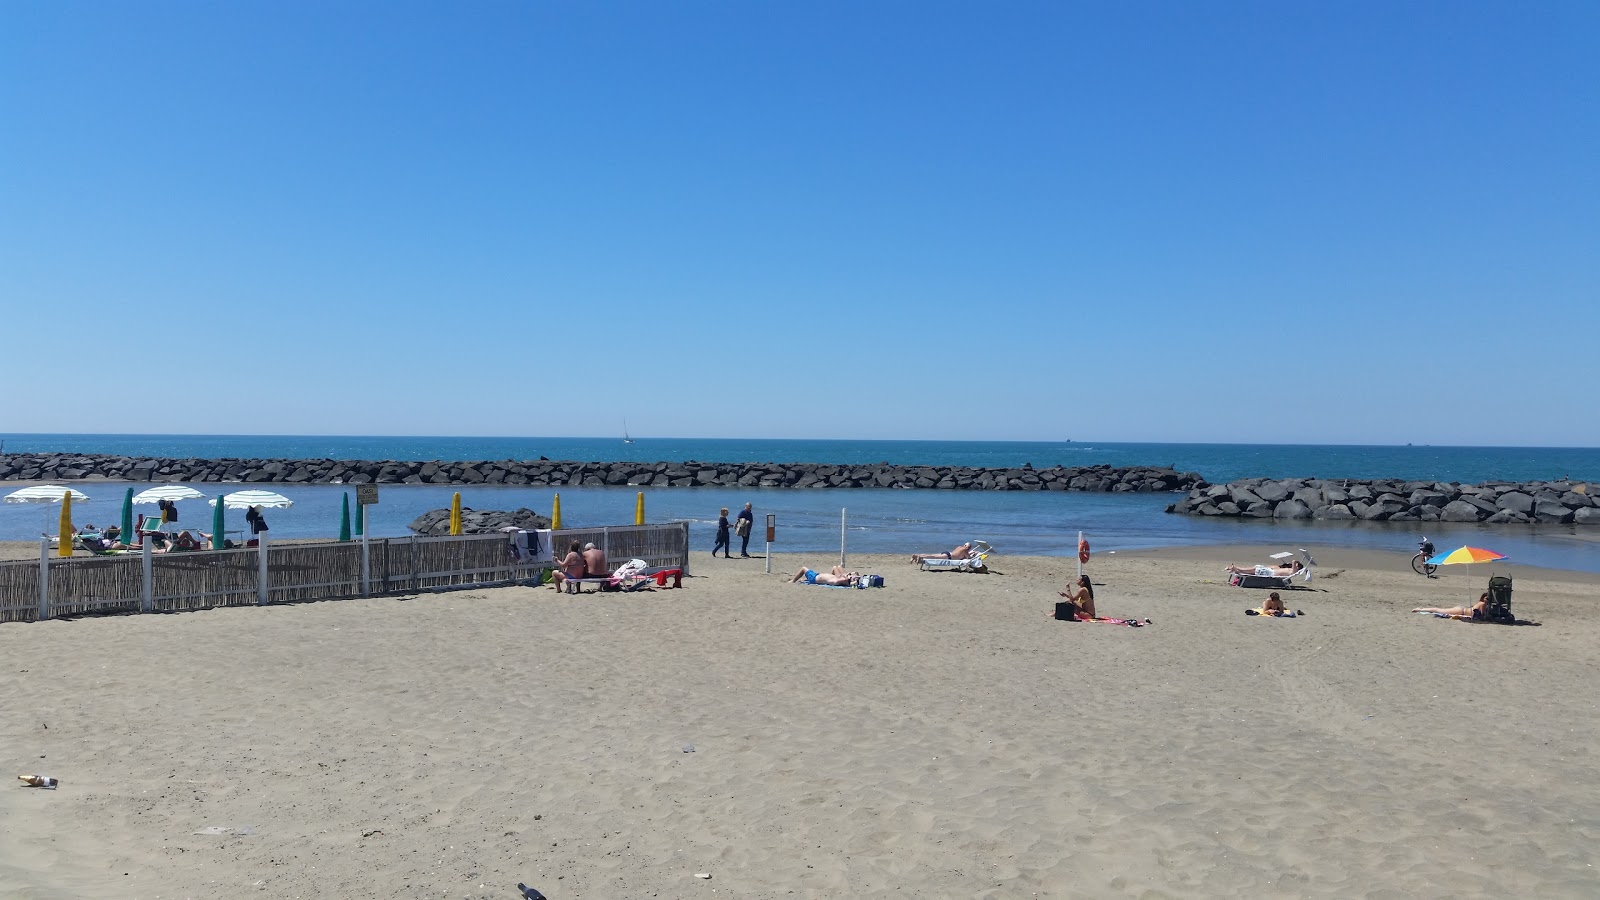 Fotografie cu Spiaggia Di Coccia Di Morto cu o suprafață de nisip maro